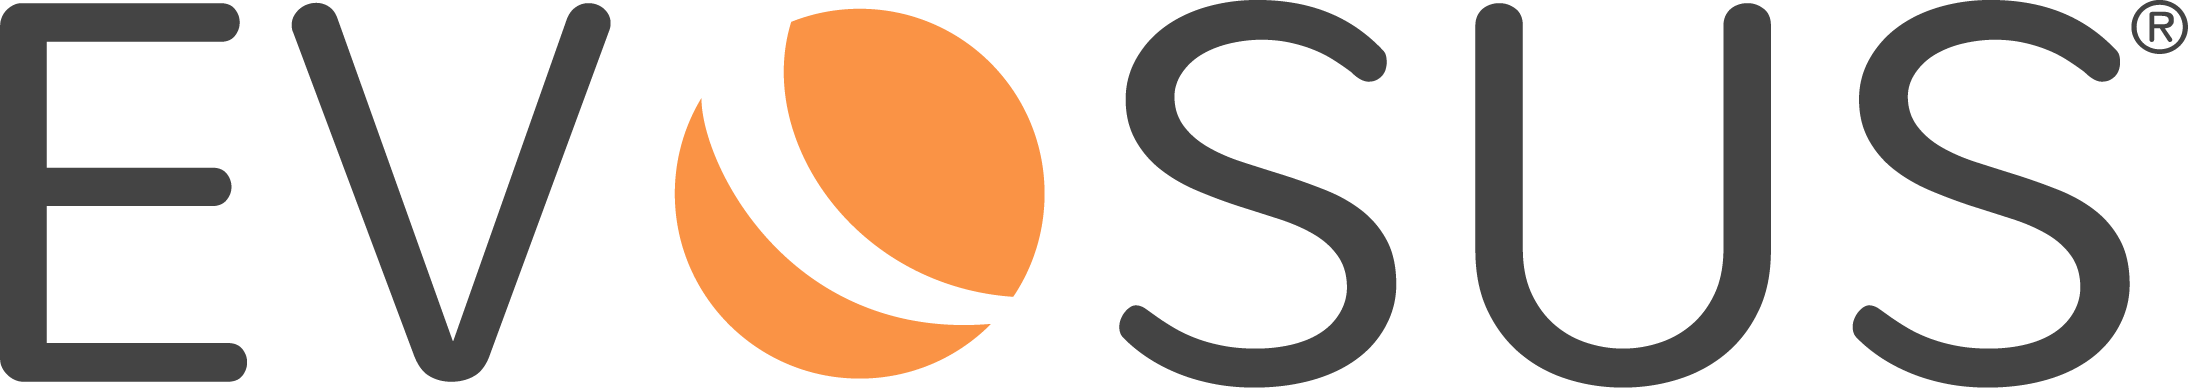 The Evosus Logo